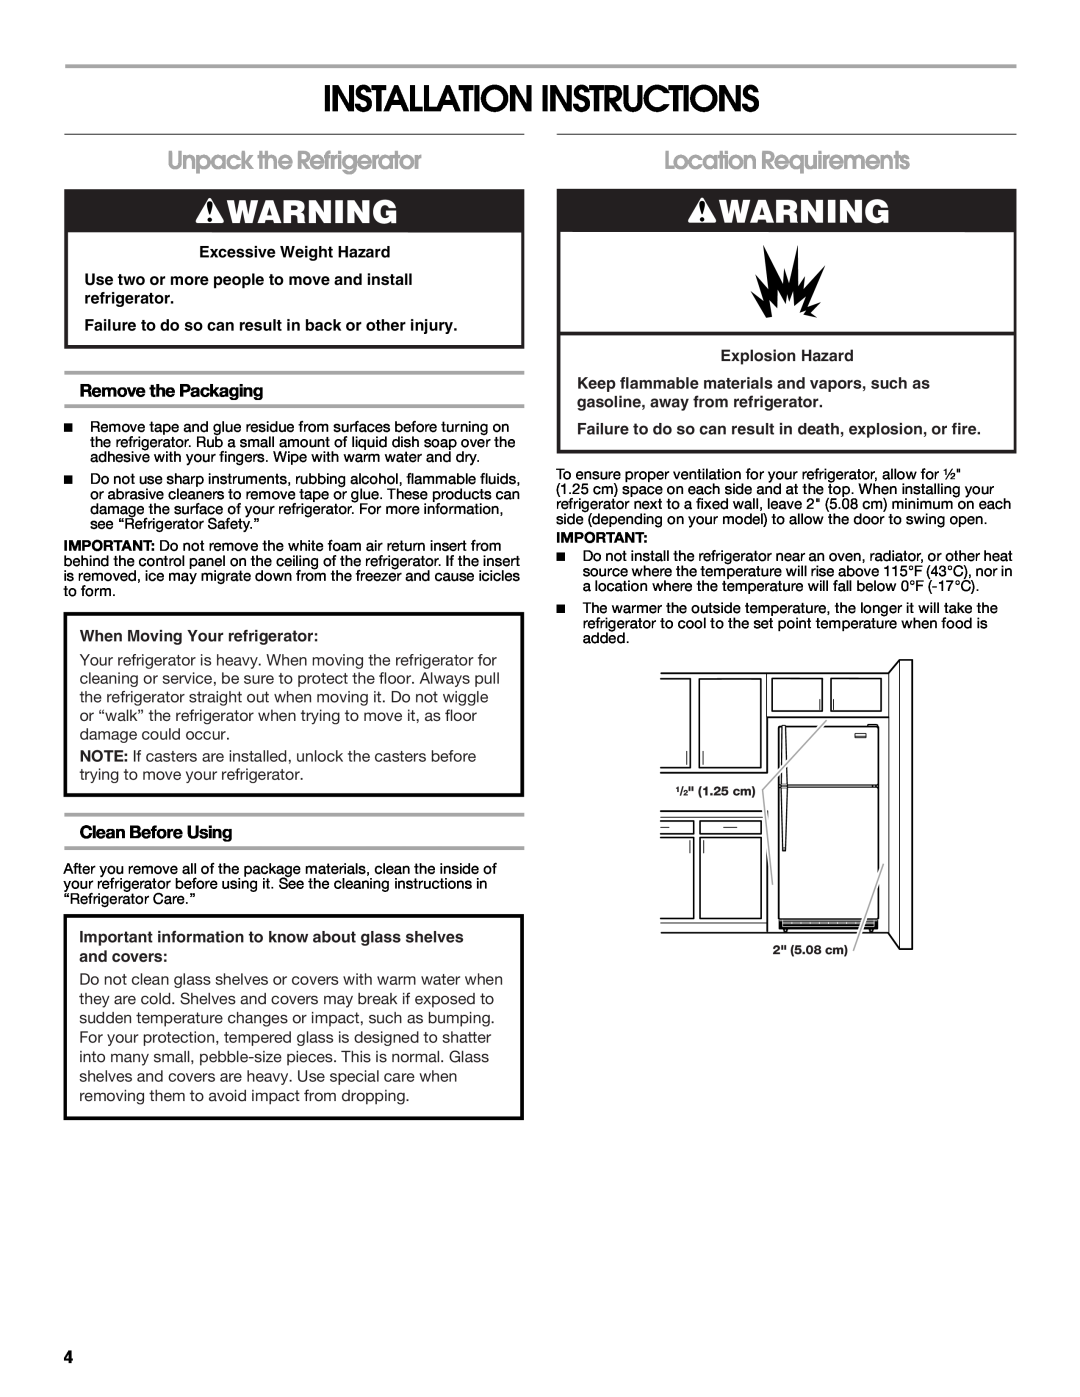 Whirlpool GARAGE REFRIGERATOR Installation Instructions, Unpack the Refrigerator, Location Requirements, Explosion Hazard 